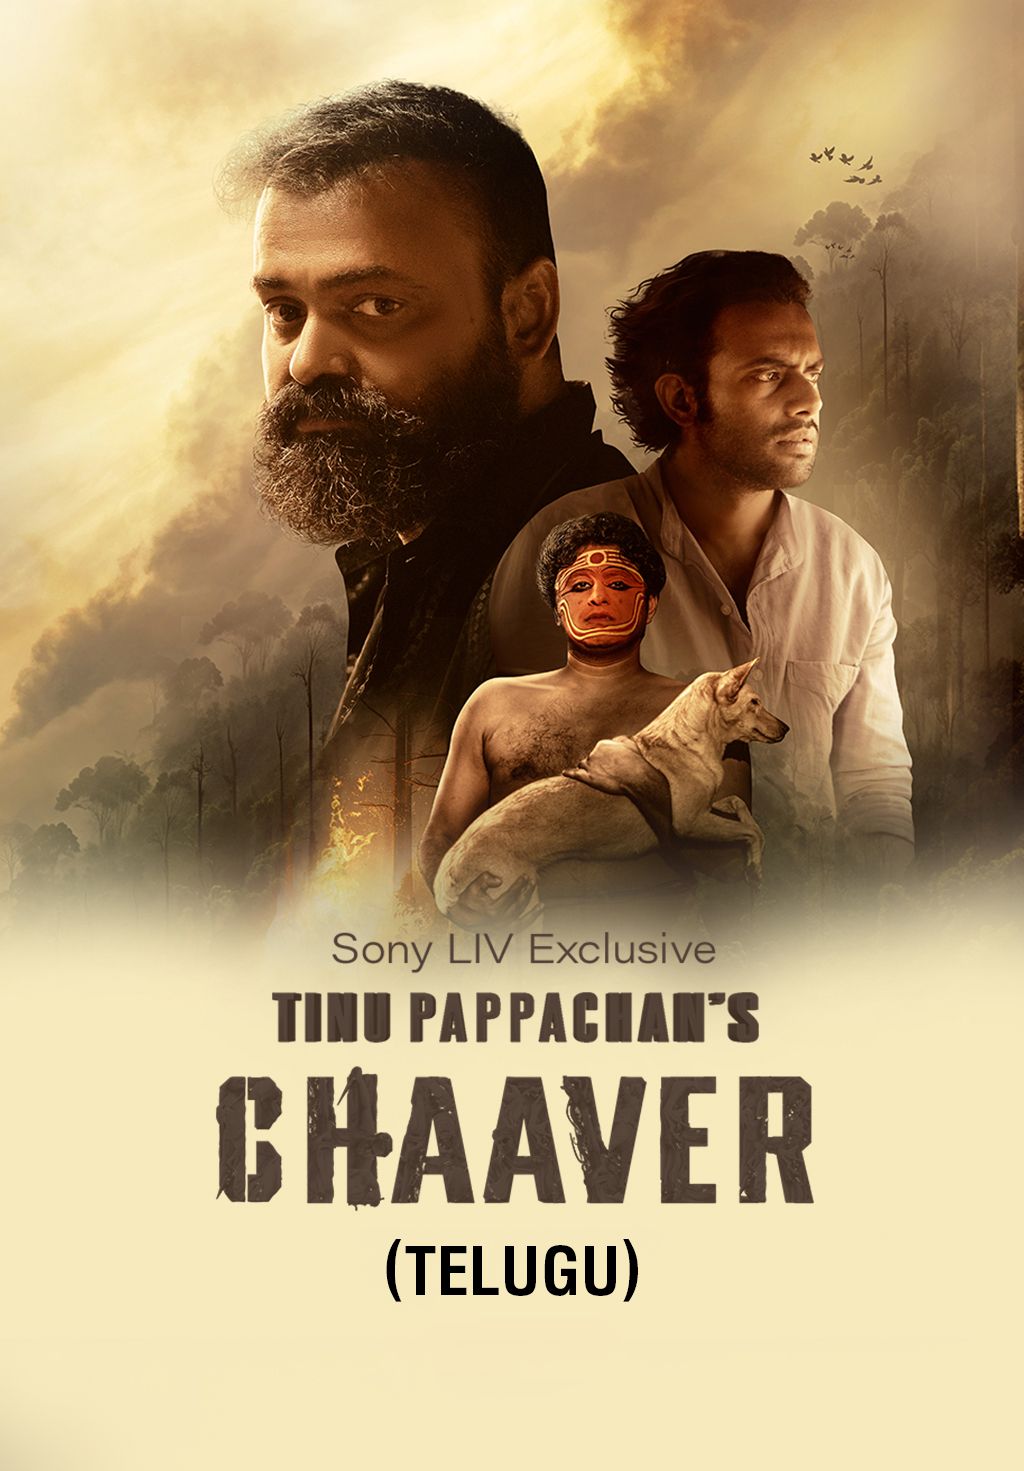 Chaaver (Telugu)